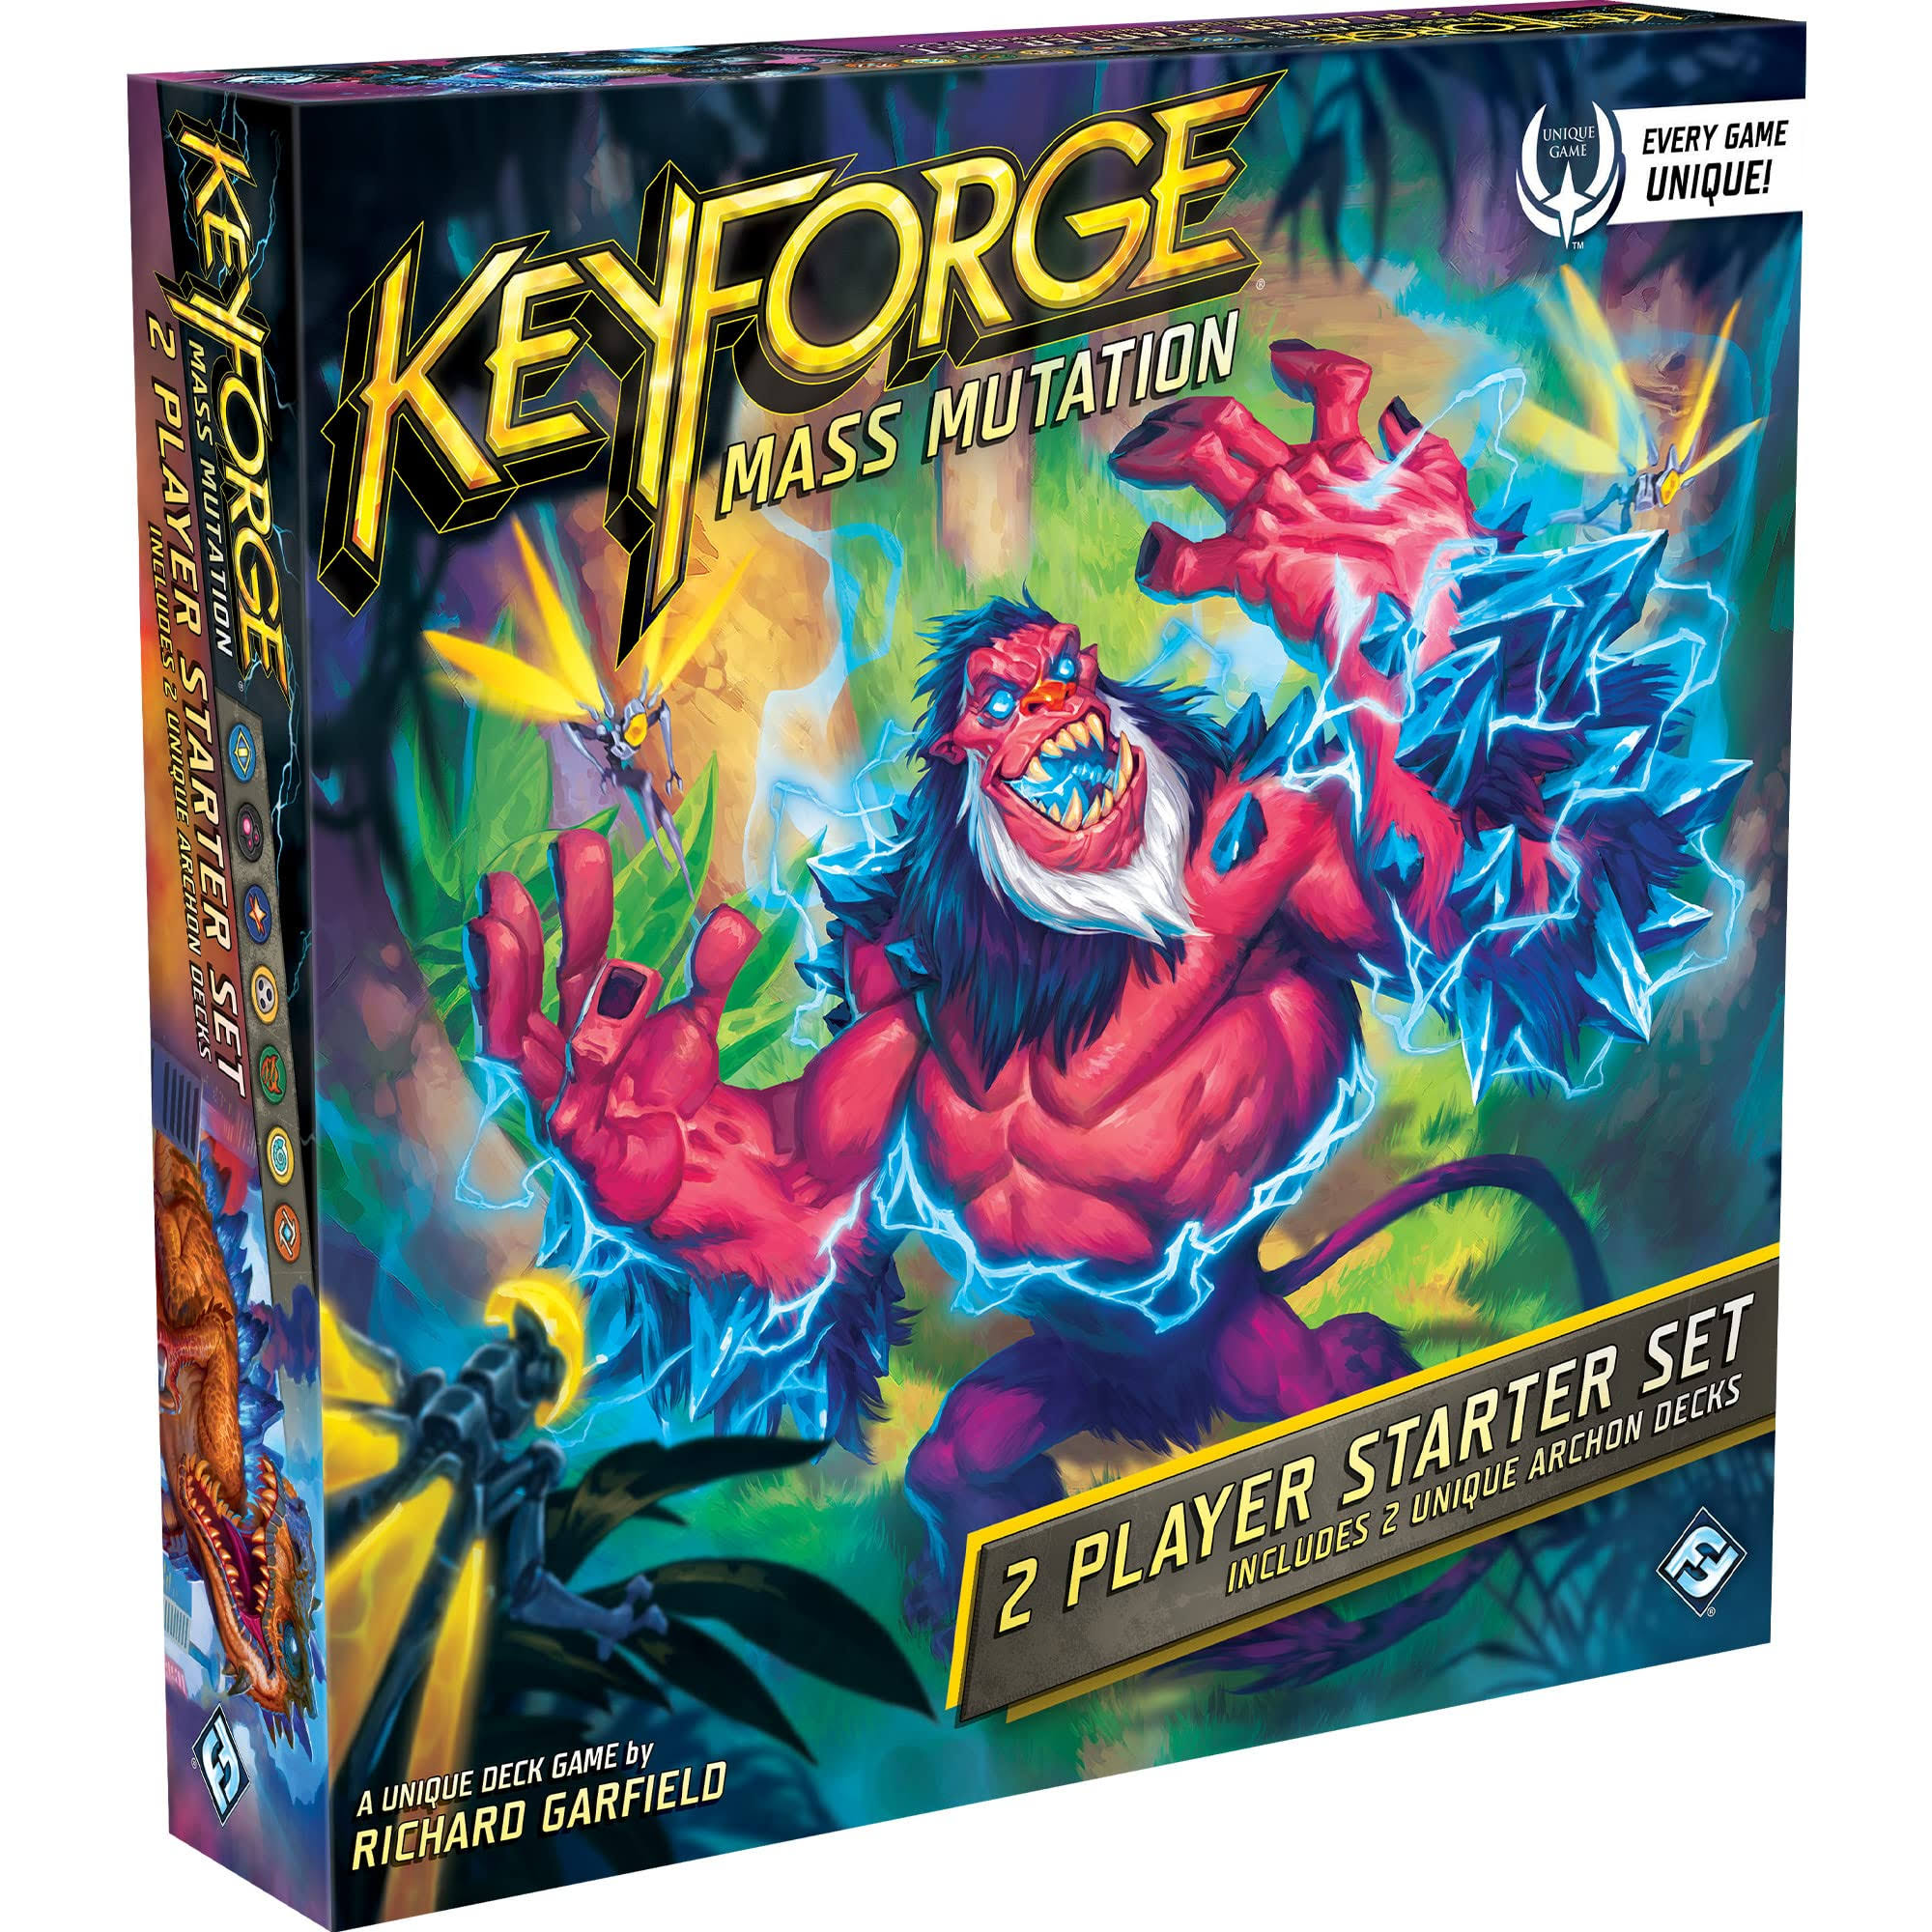 KeyForge Mass Mutation 2 Player Starter Set